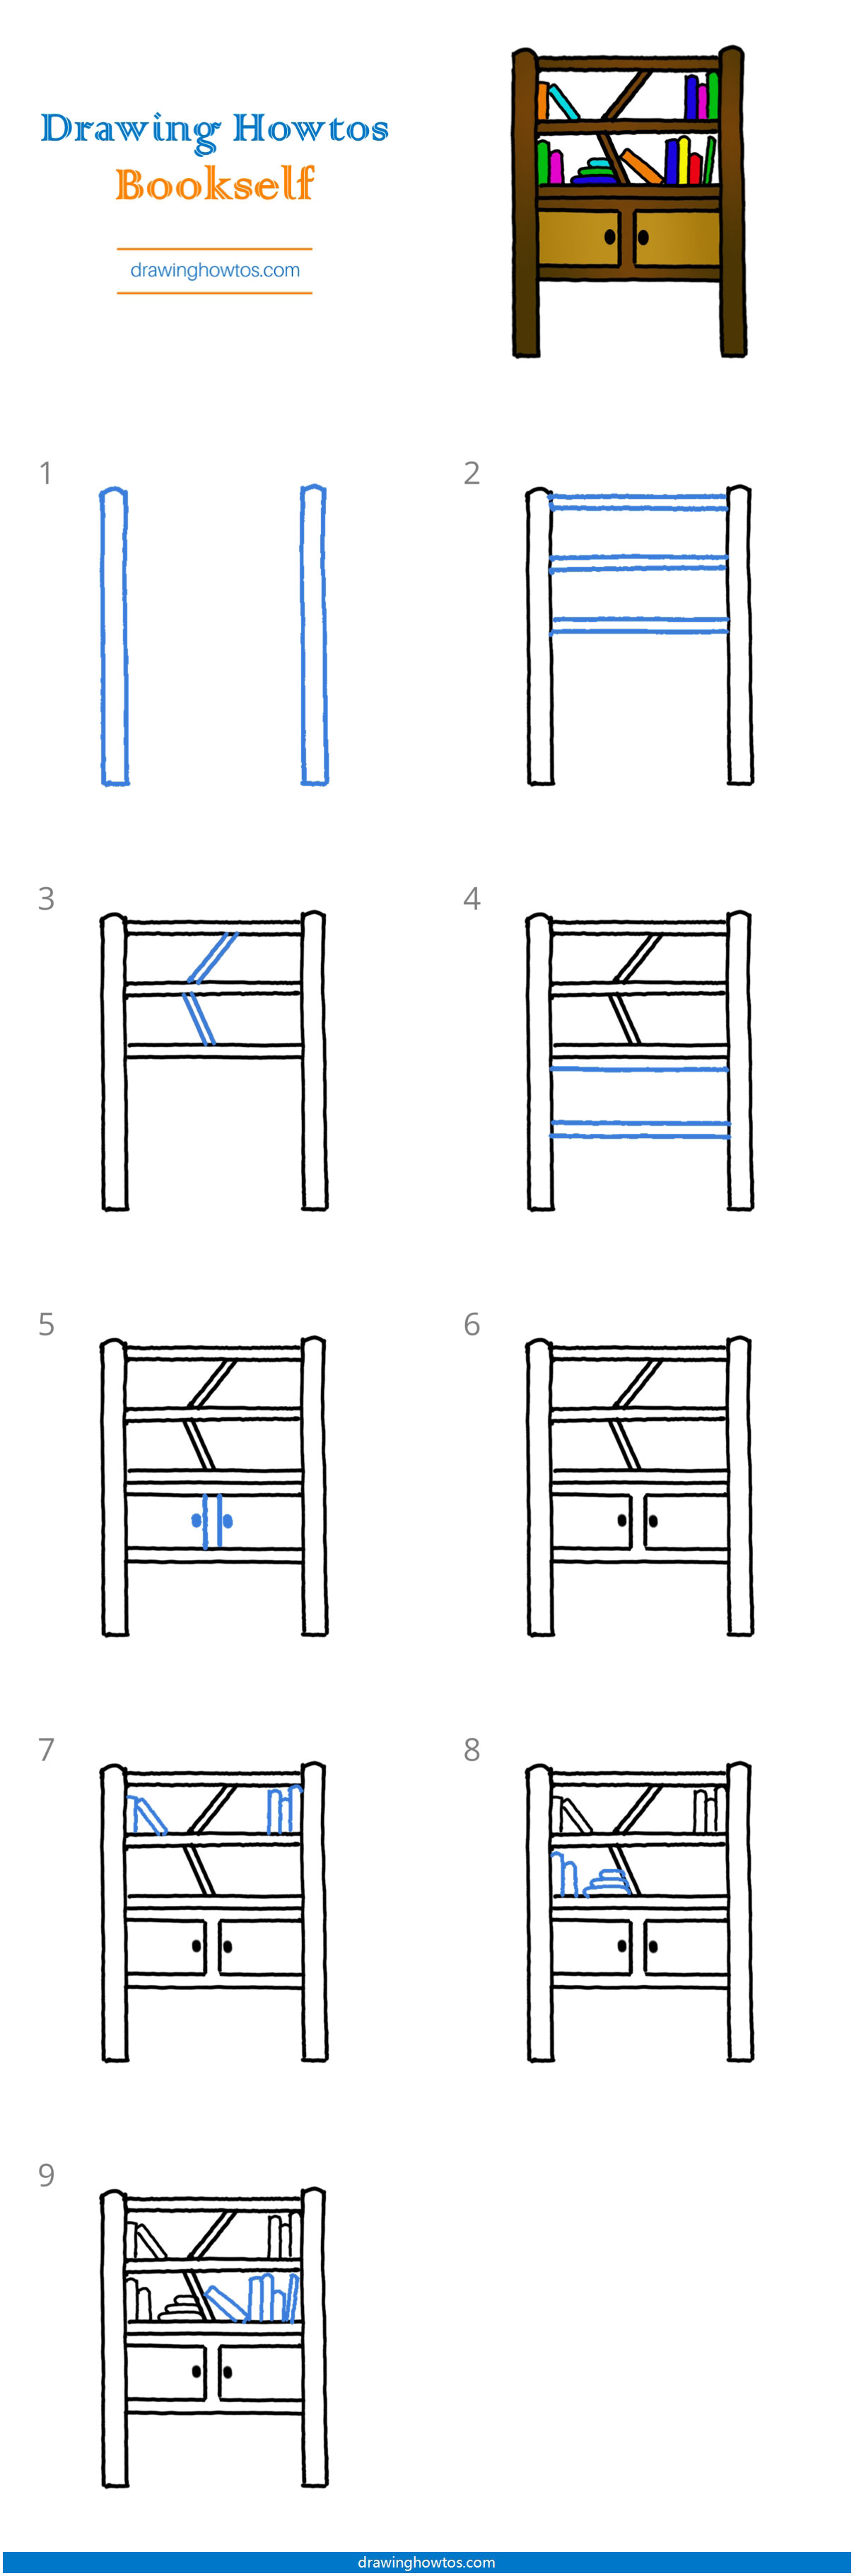 How to Draw a Bookshelf Step by Step